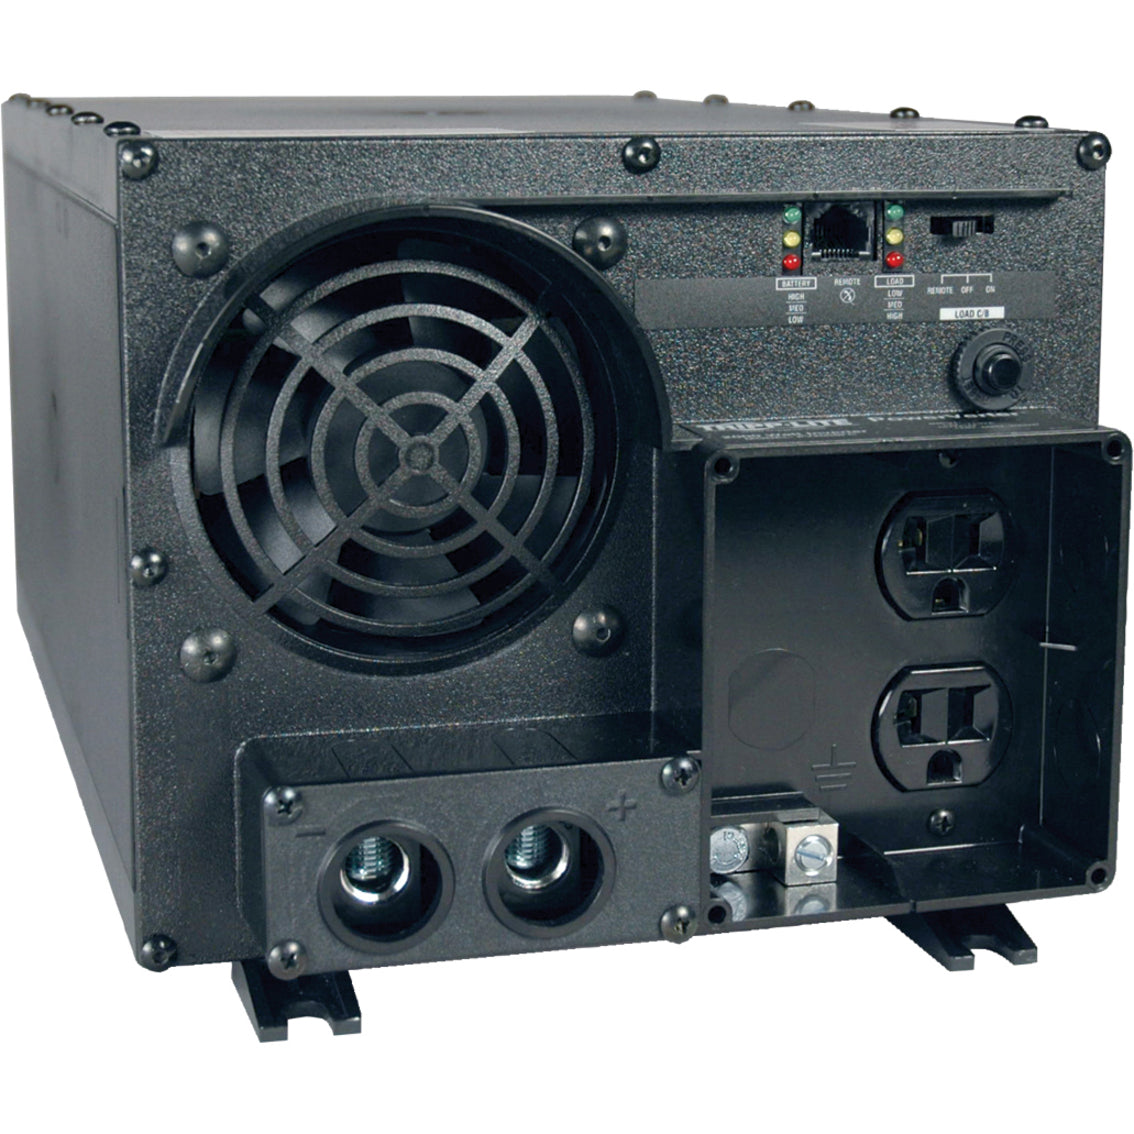 Tripp Lite PV2400FC PowerVerter Plus Inverter 2400W, 24V DC to 120V AC, Pulse-width Modulated Sine Wave